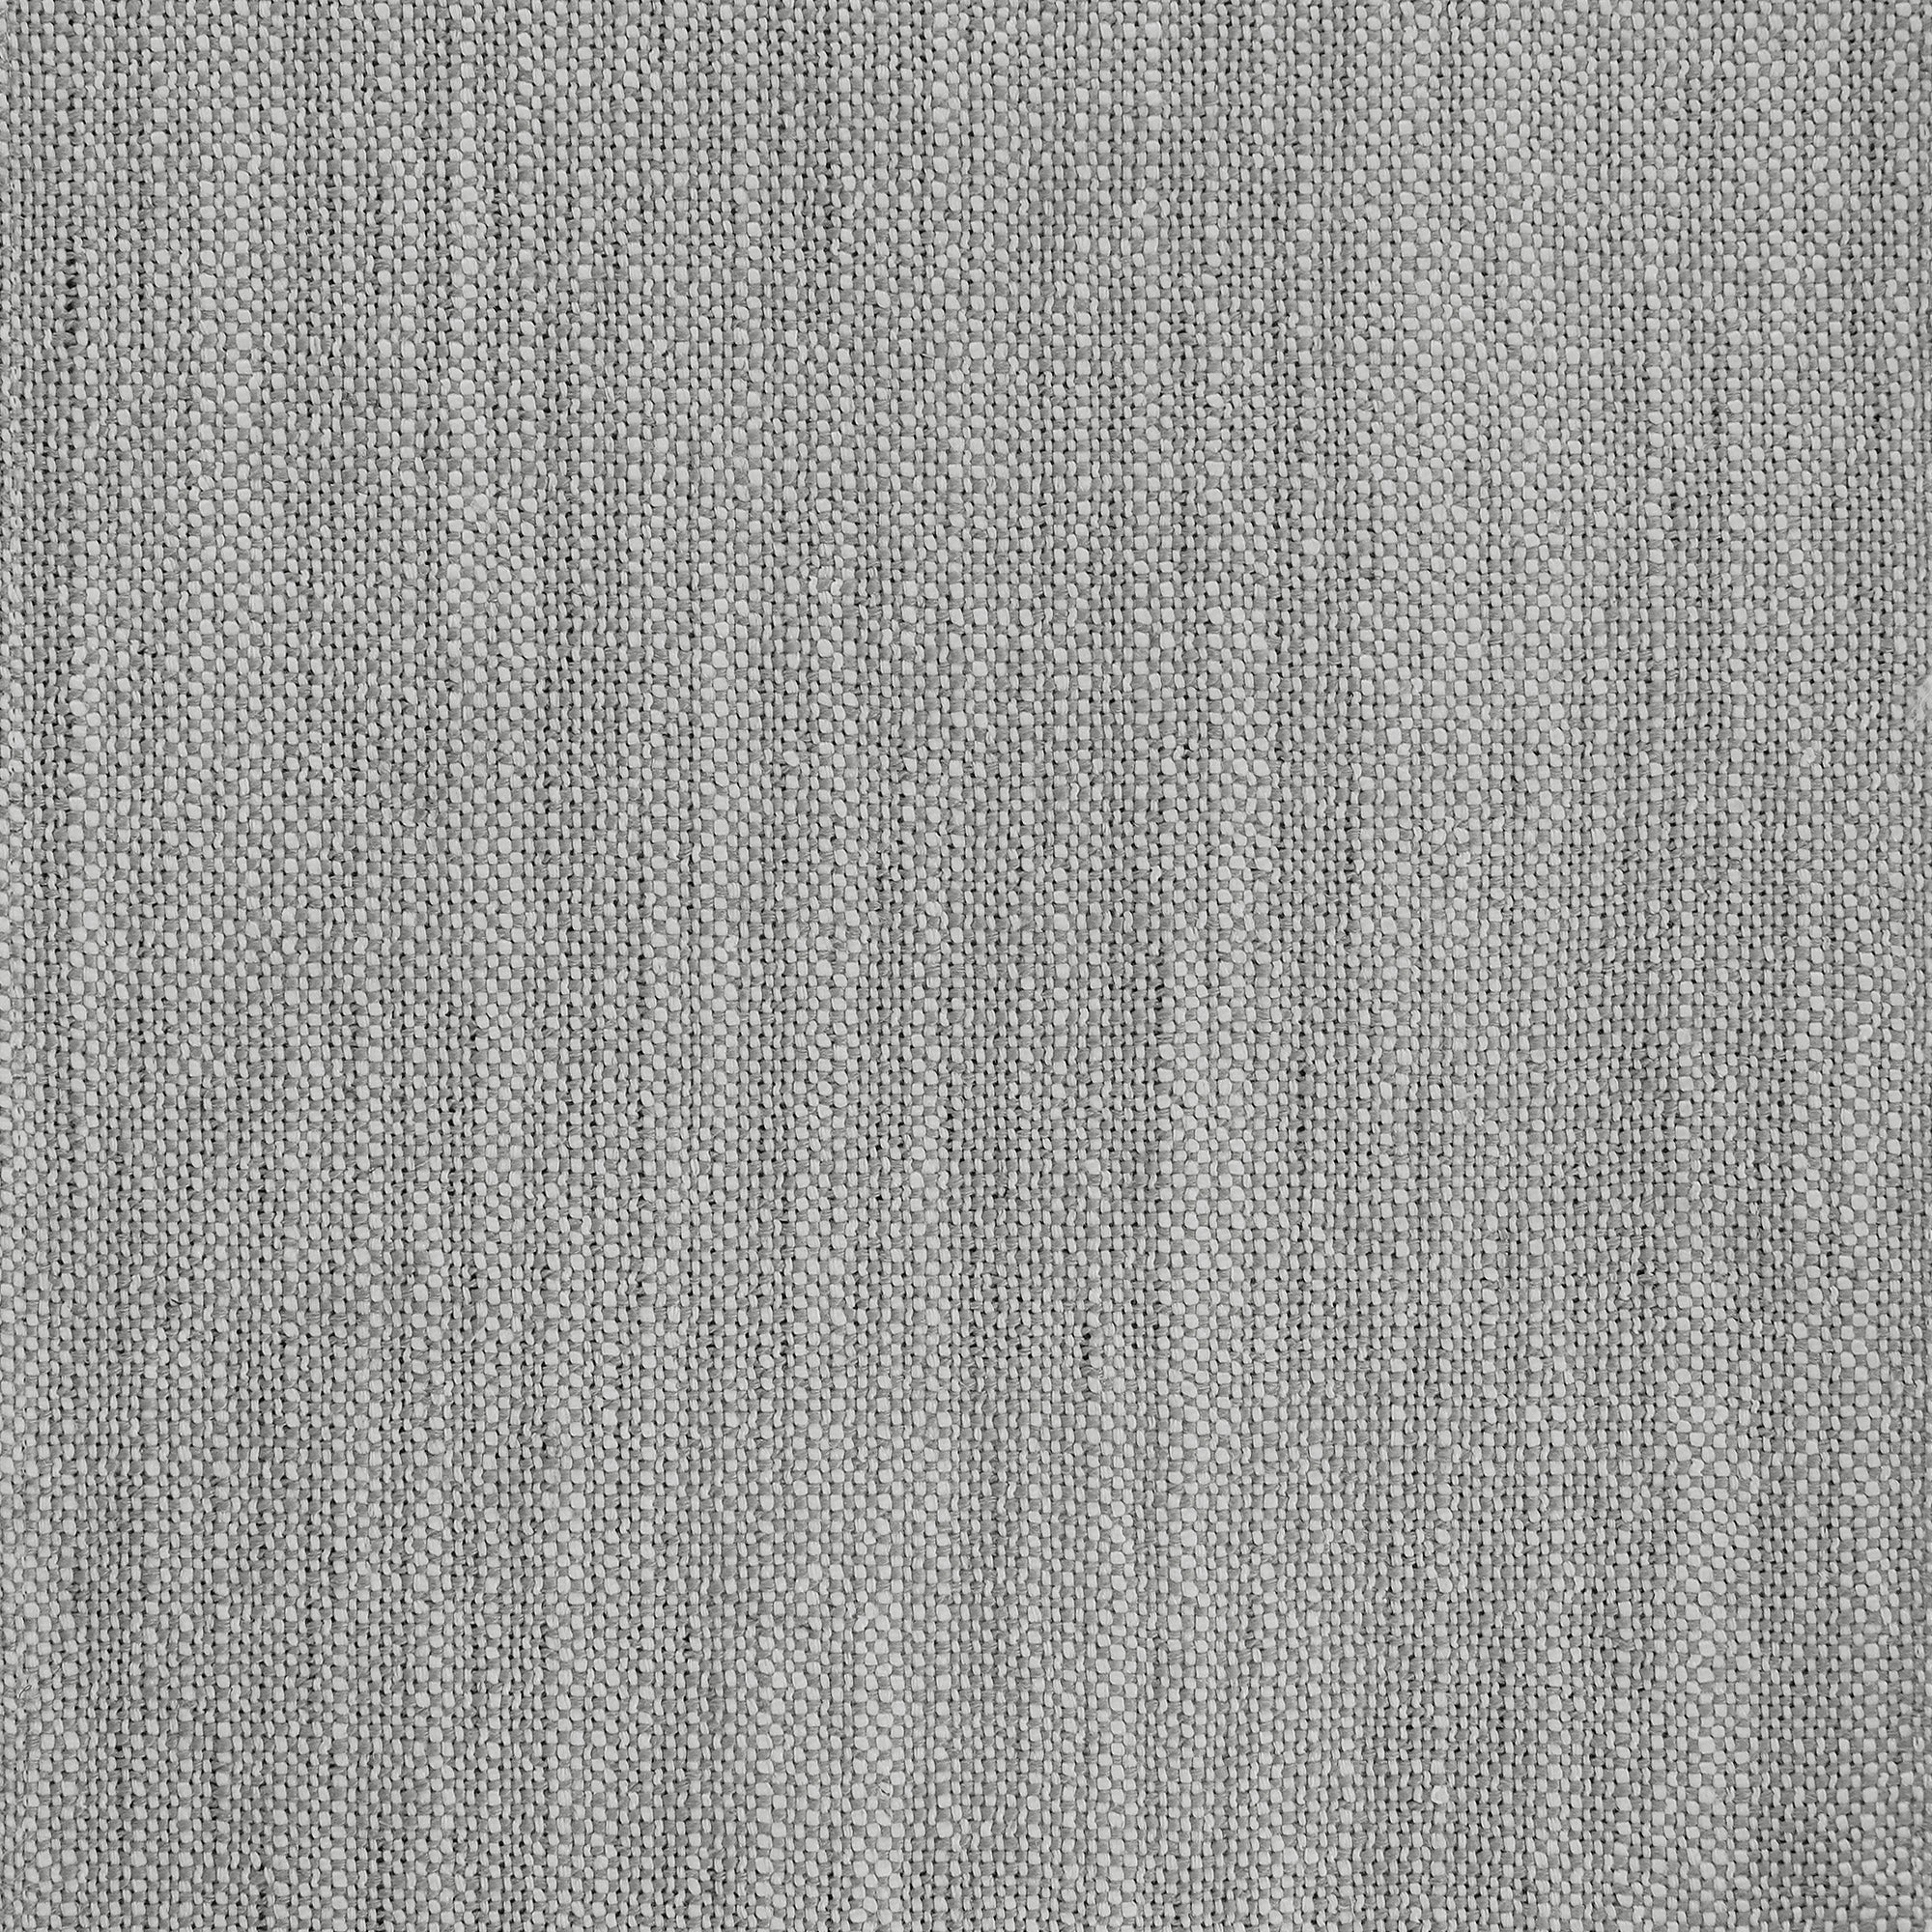 Aviva Fabric | Solid Textured Linen Blend